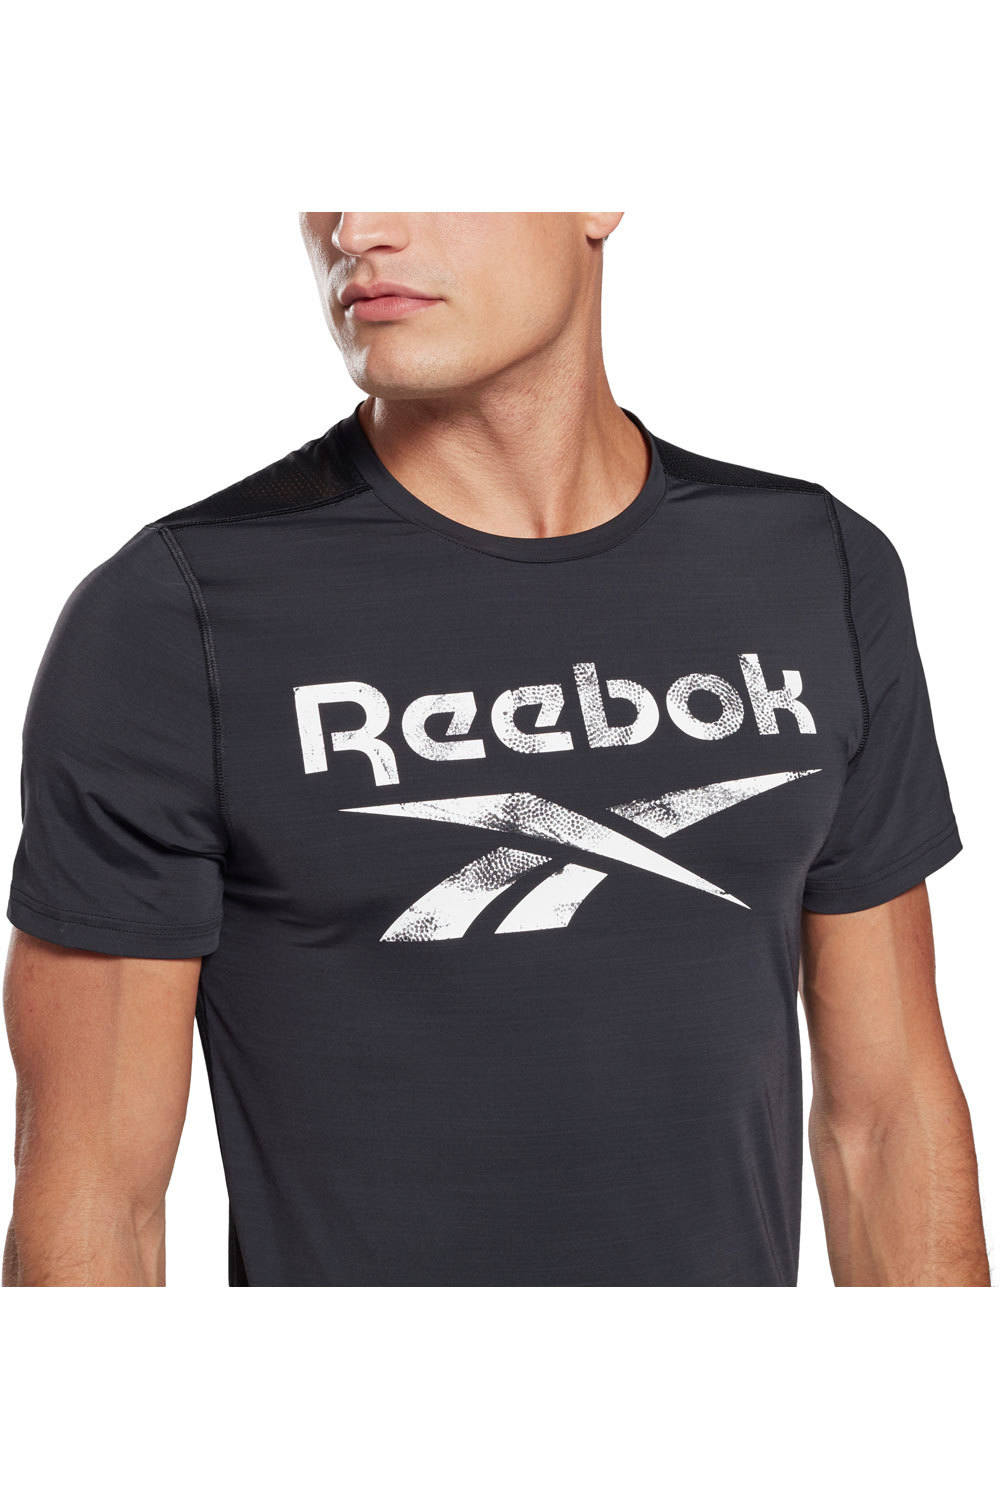 Reebok camiseta fitness hombre WOR AC GRAPHIC SS Q1 vista detalle